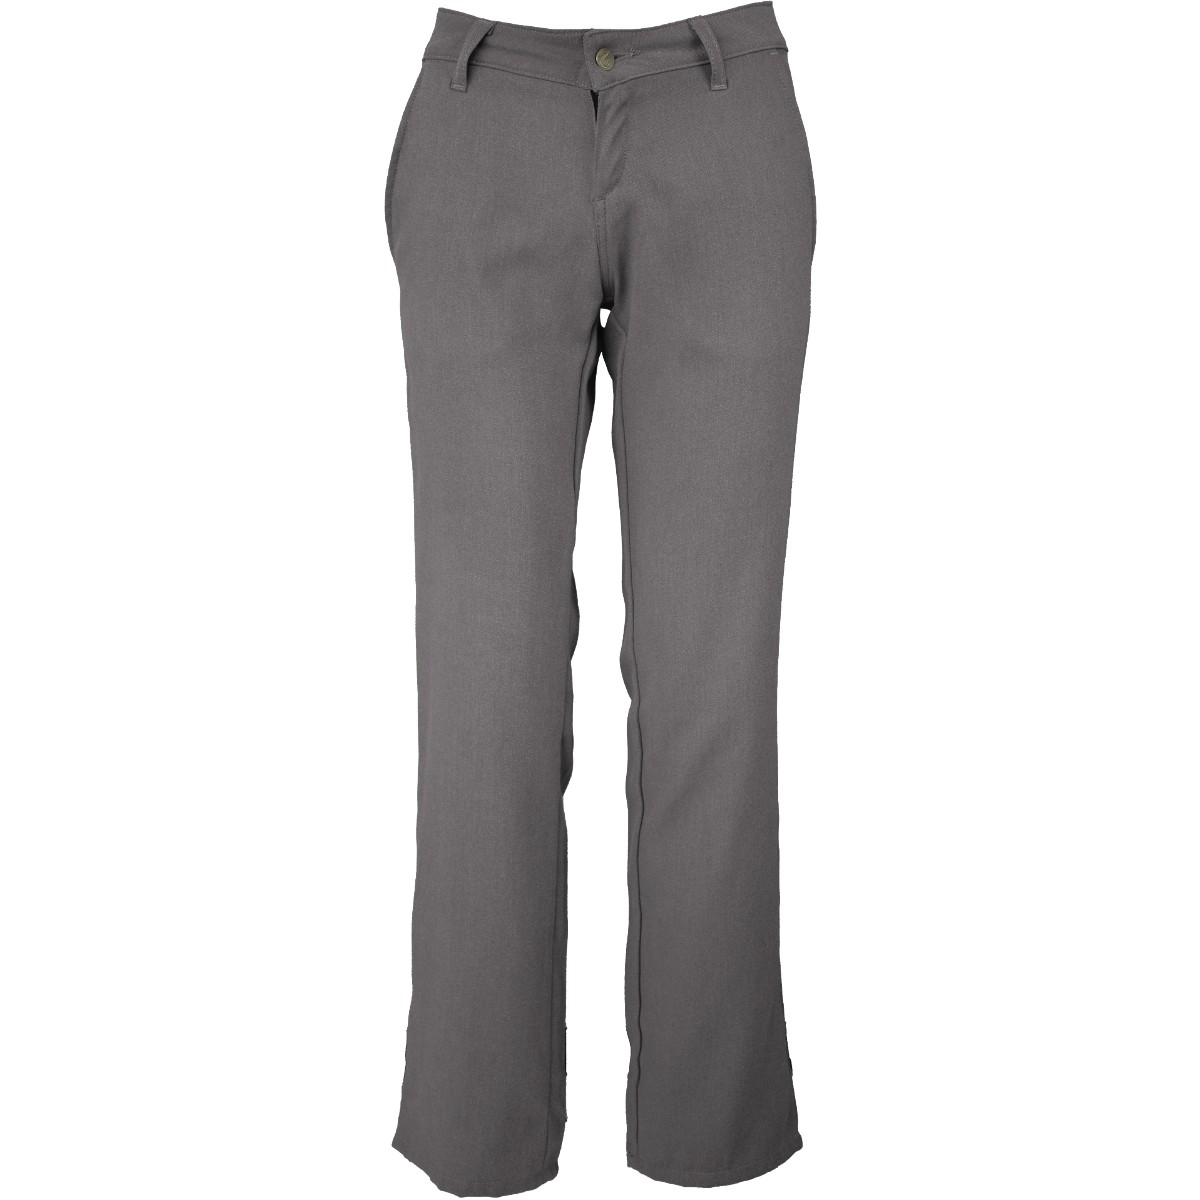 LAPCO Ladies FR Uniform Pants in Gray